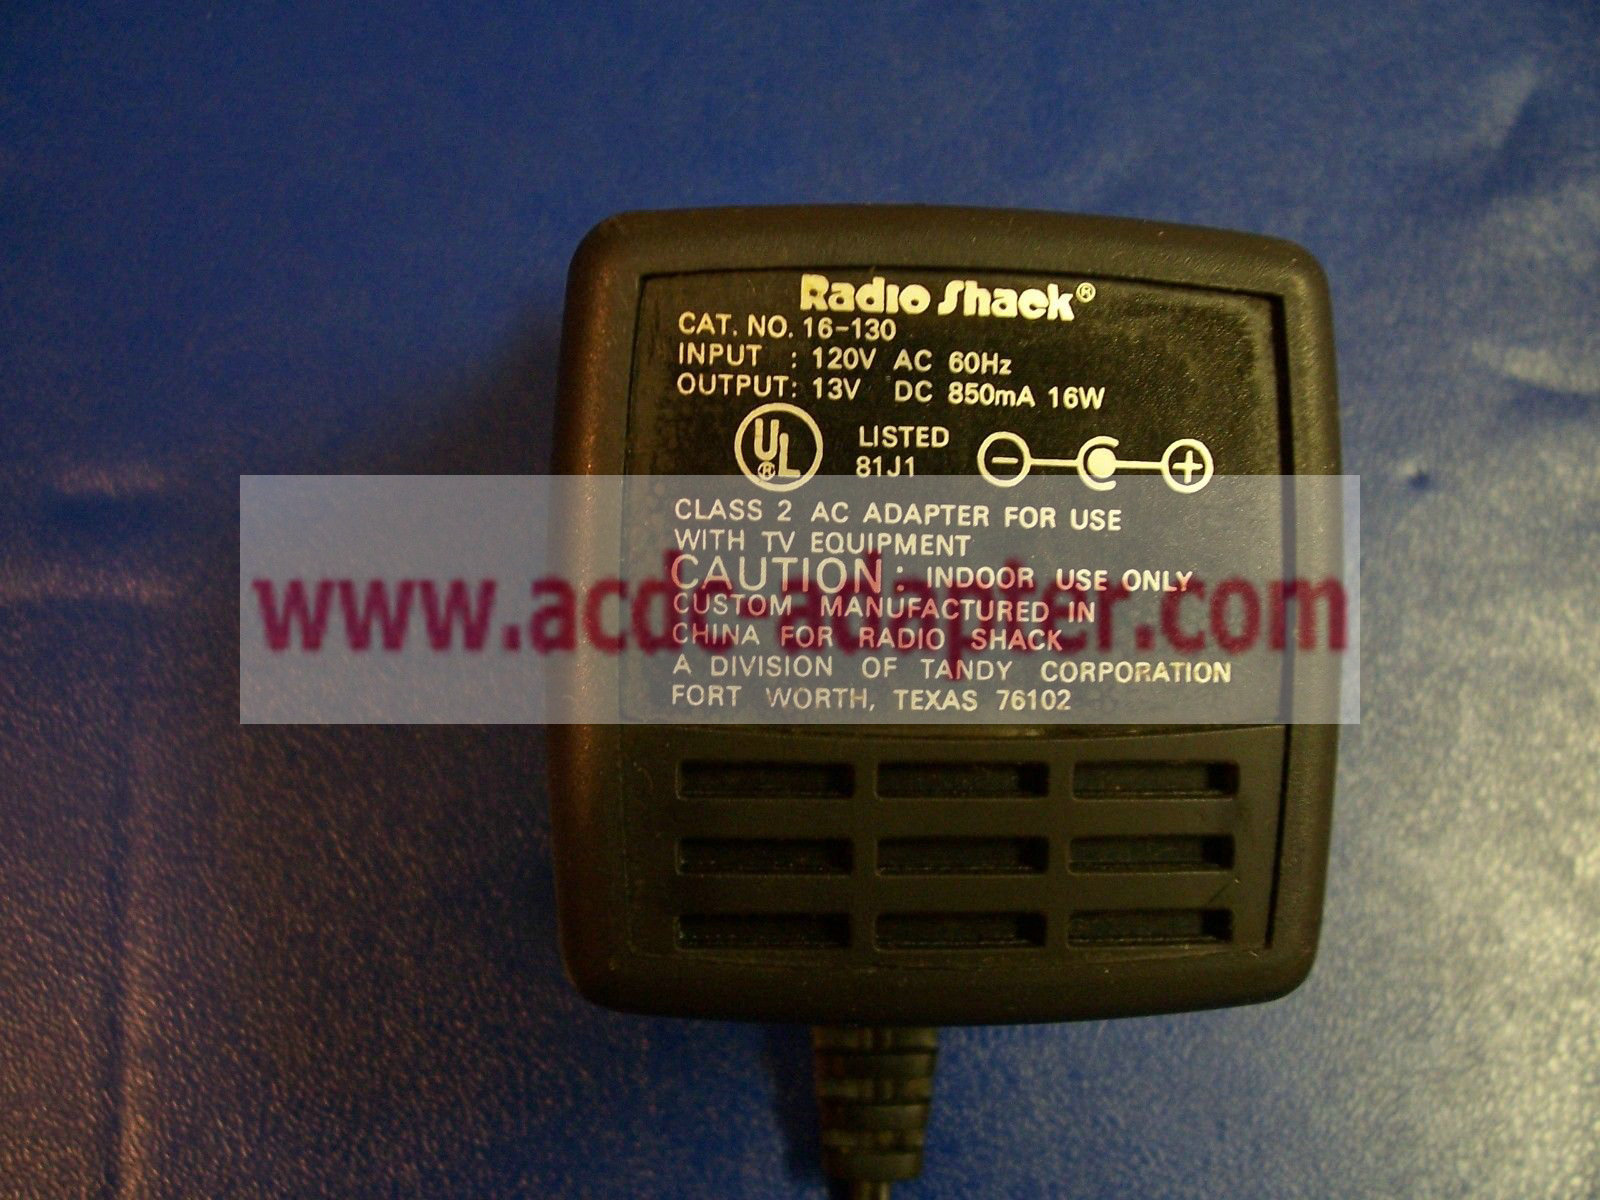 Genuine 13V 850mA Radio Shack 16-130 AC Power Adapter